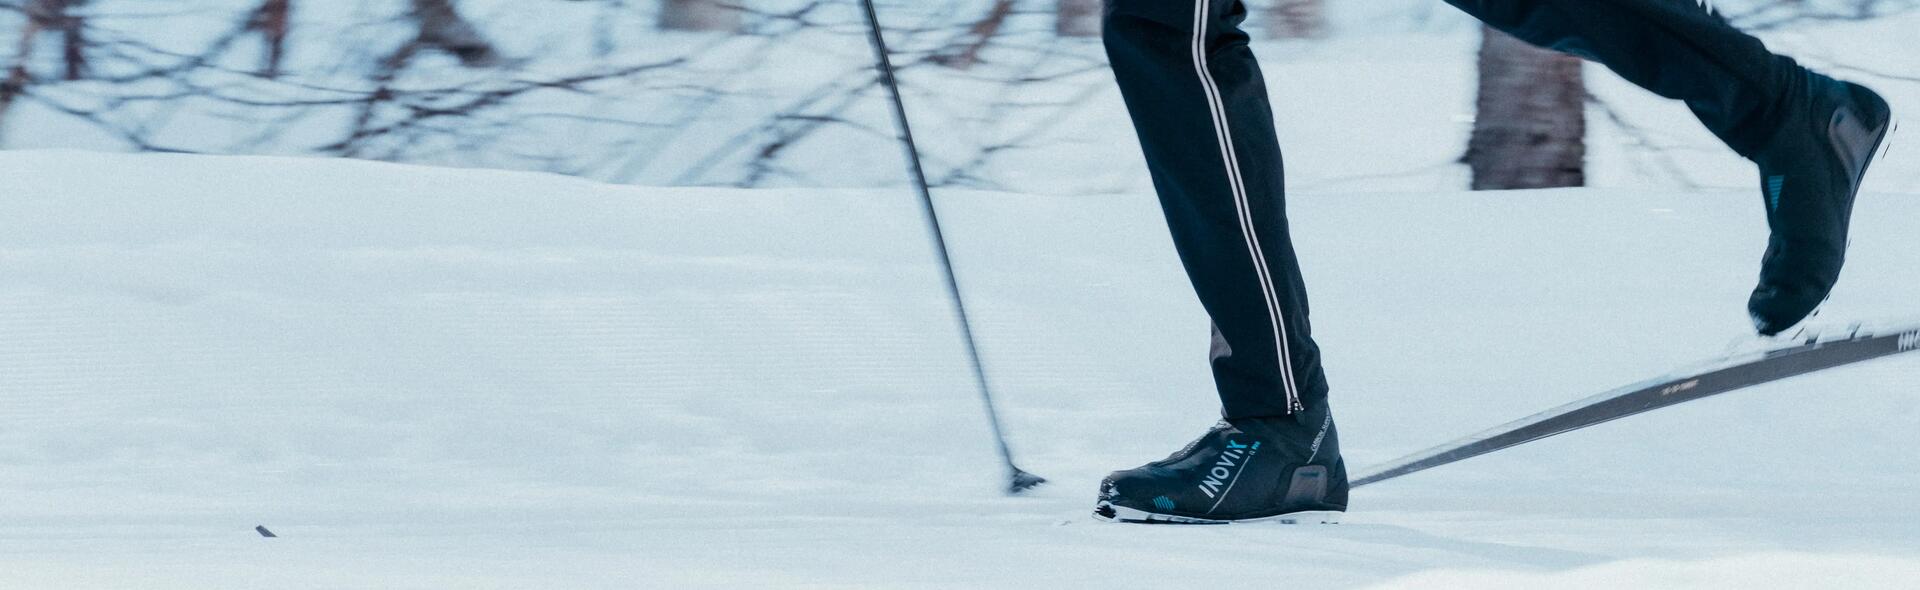 chaussures de ski de fond classique